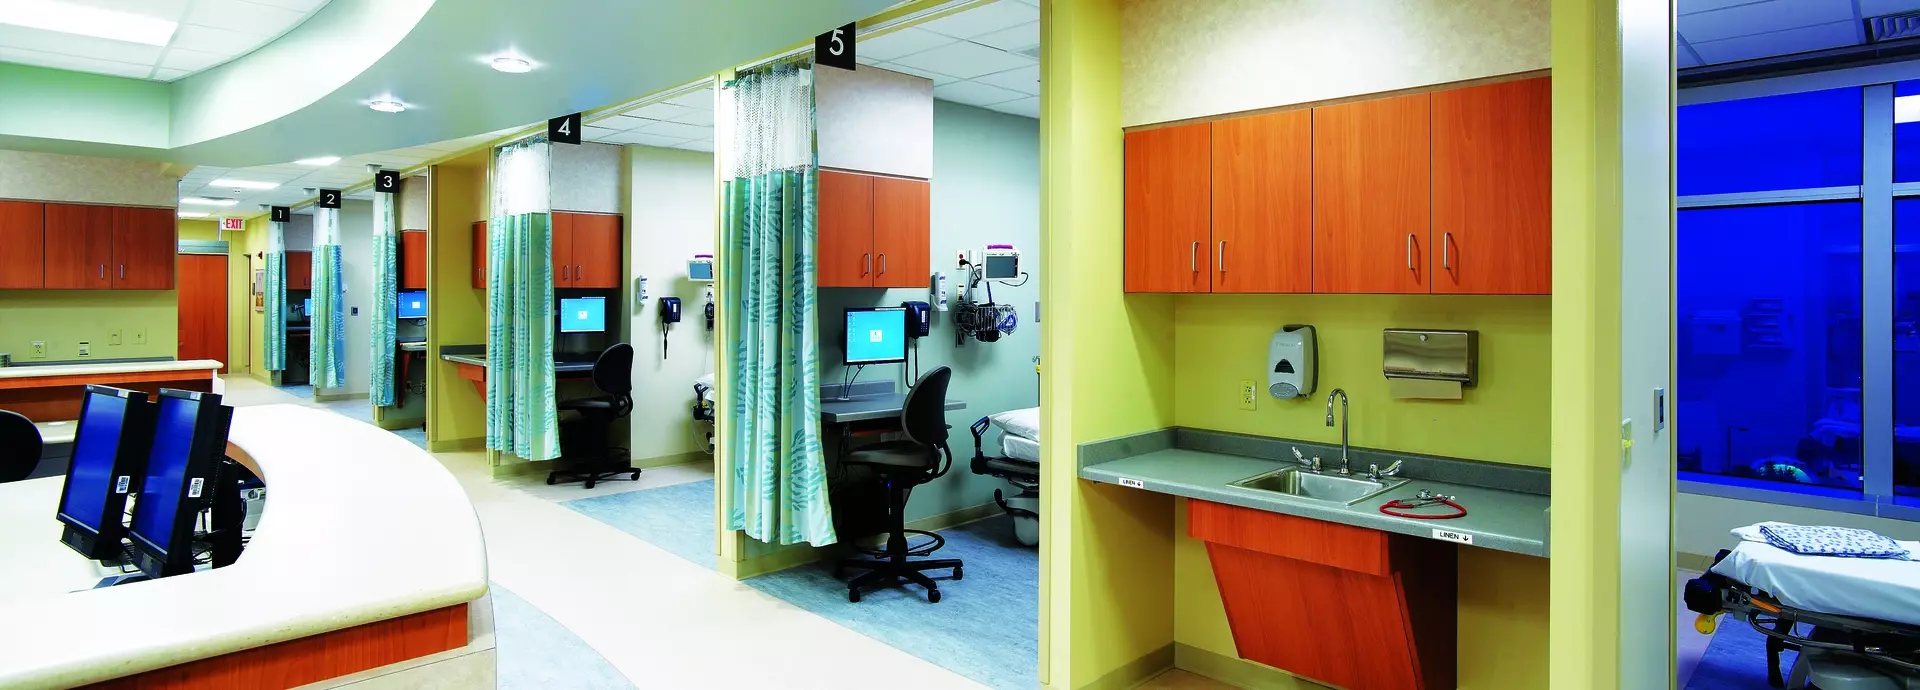 Essentia Health - St. Mary's Medical Center_5.tif